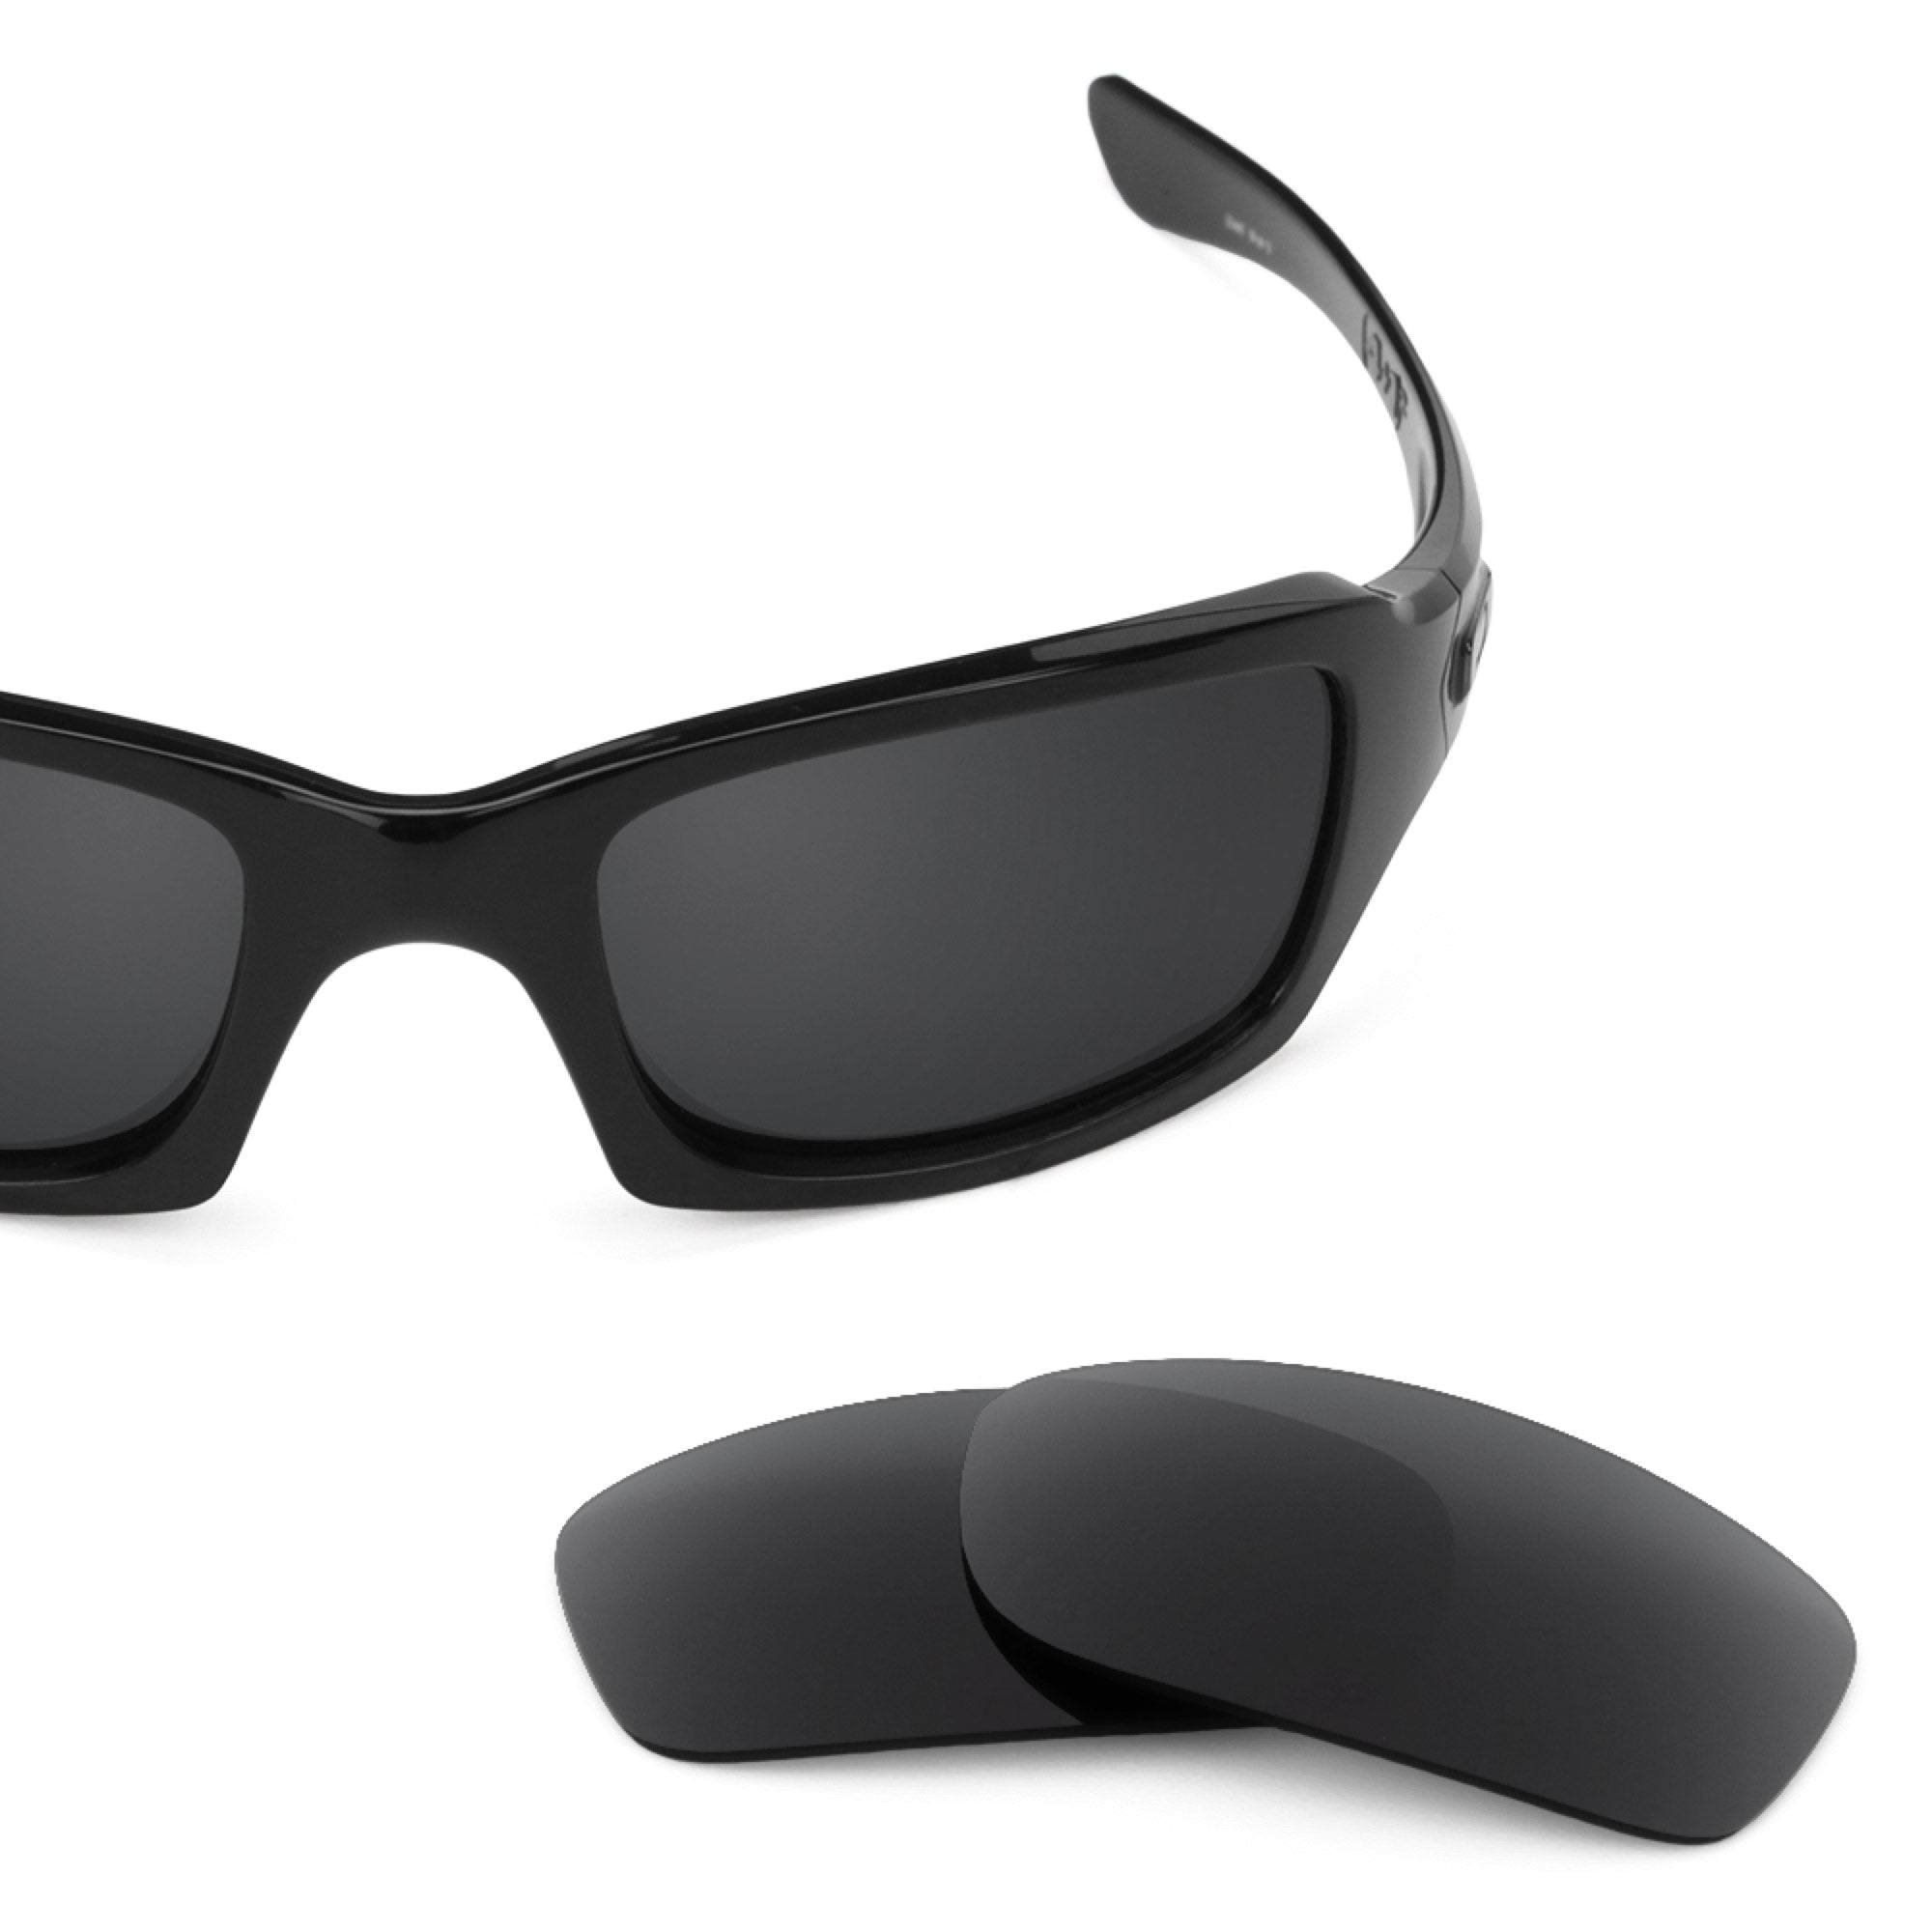 Oakley Radarlock Edge replacement lenses by Sunglasses Restorer